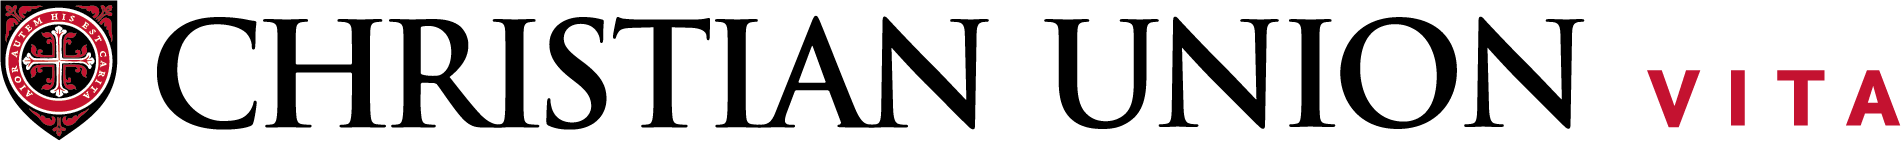 Christian Union Vita Logo